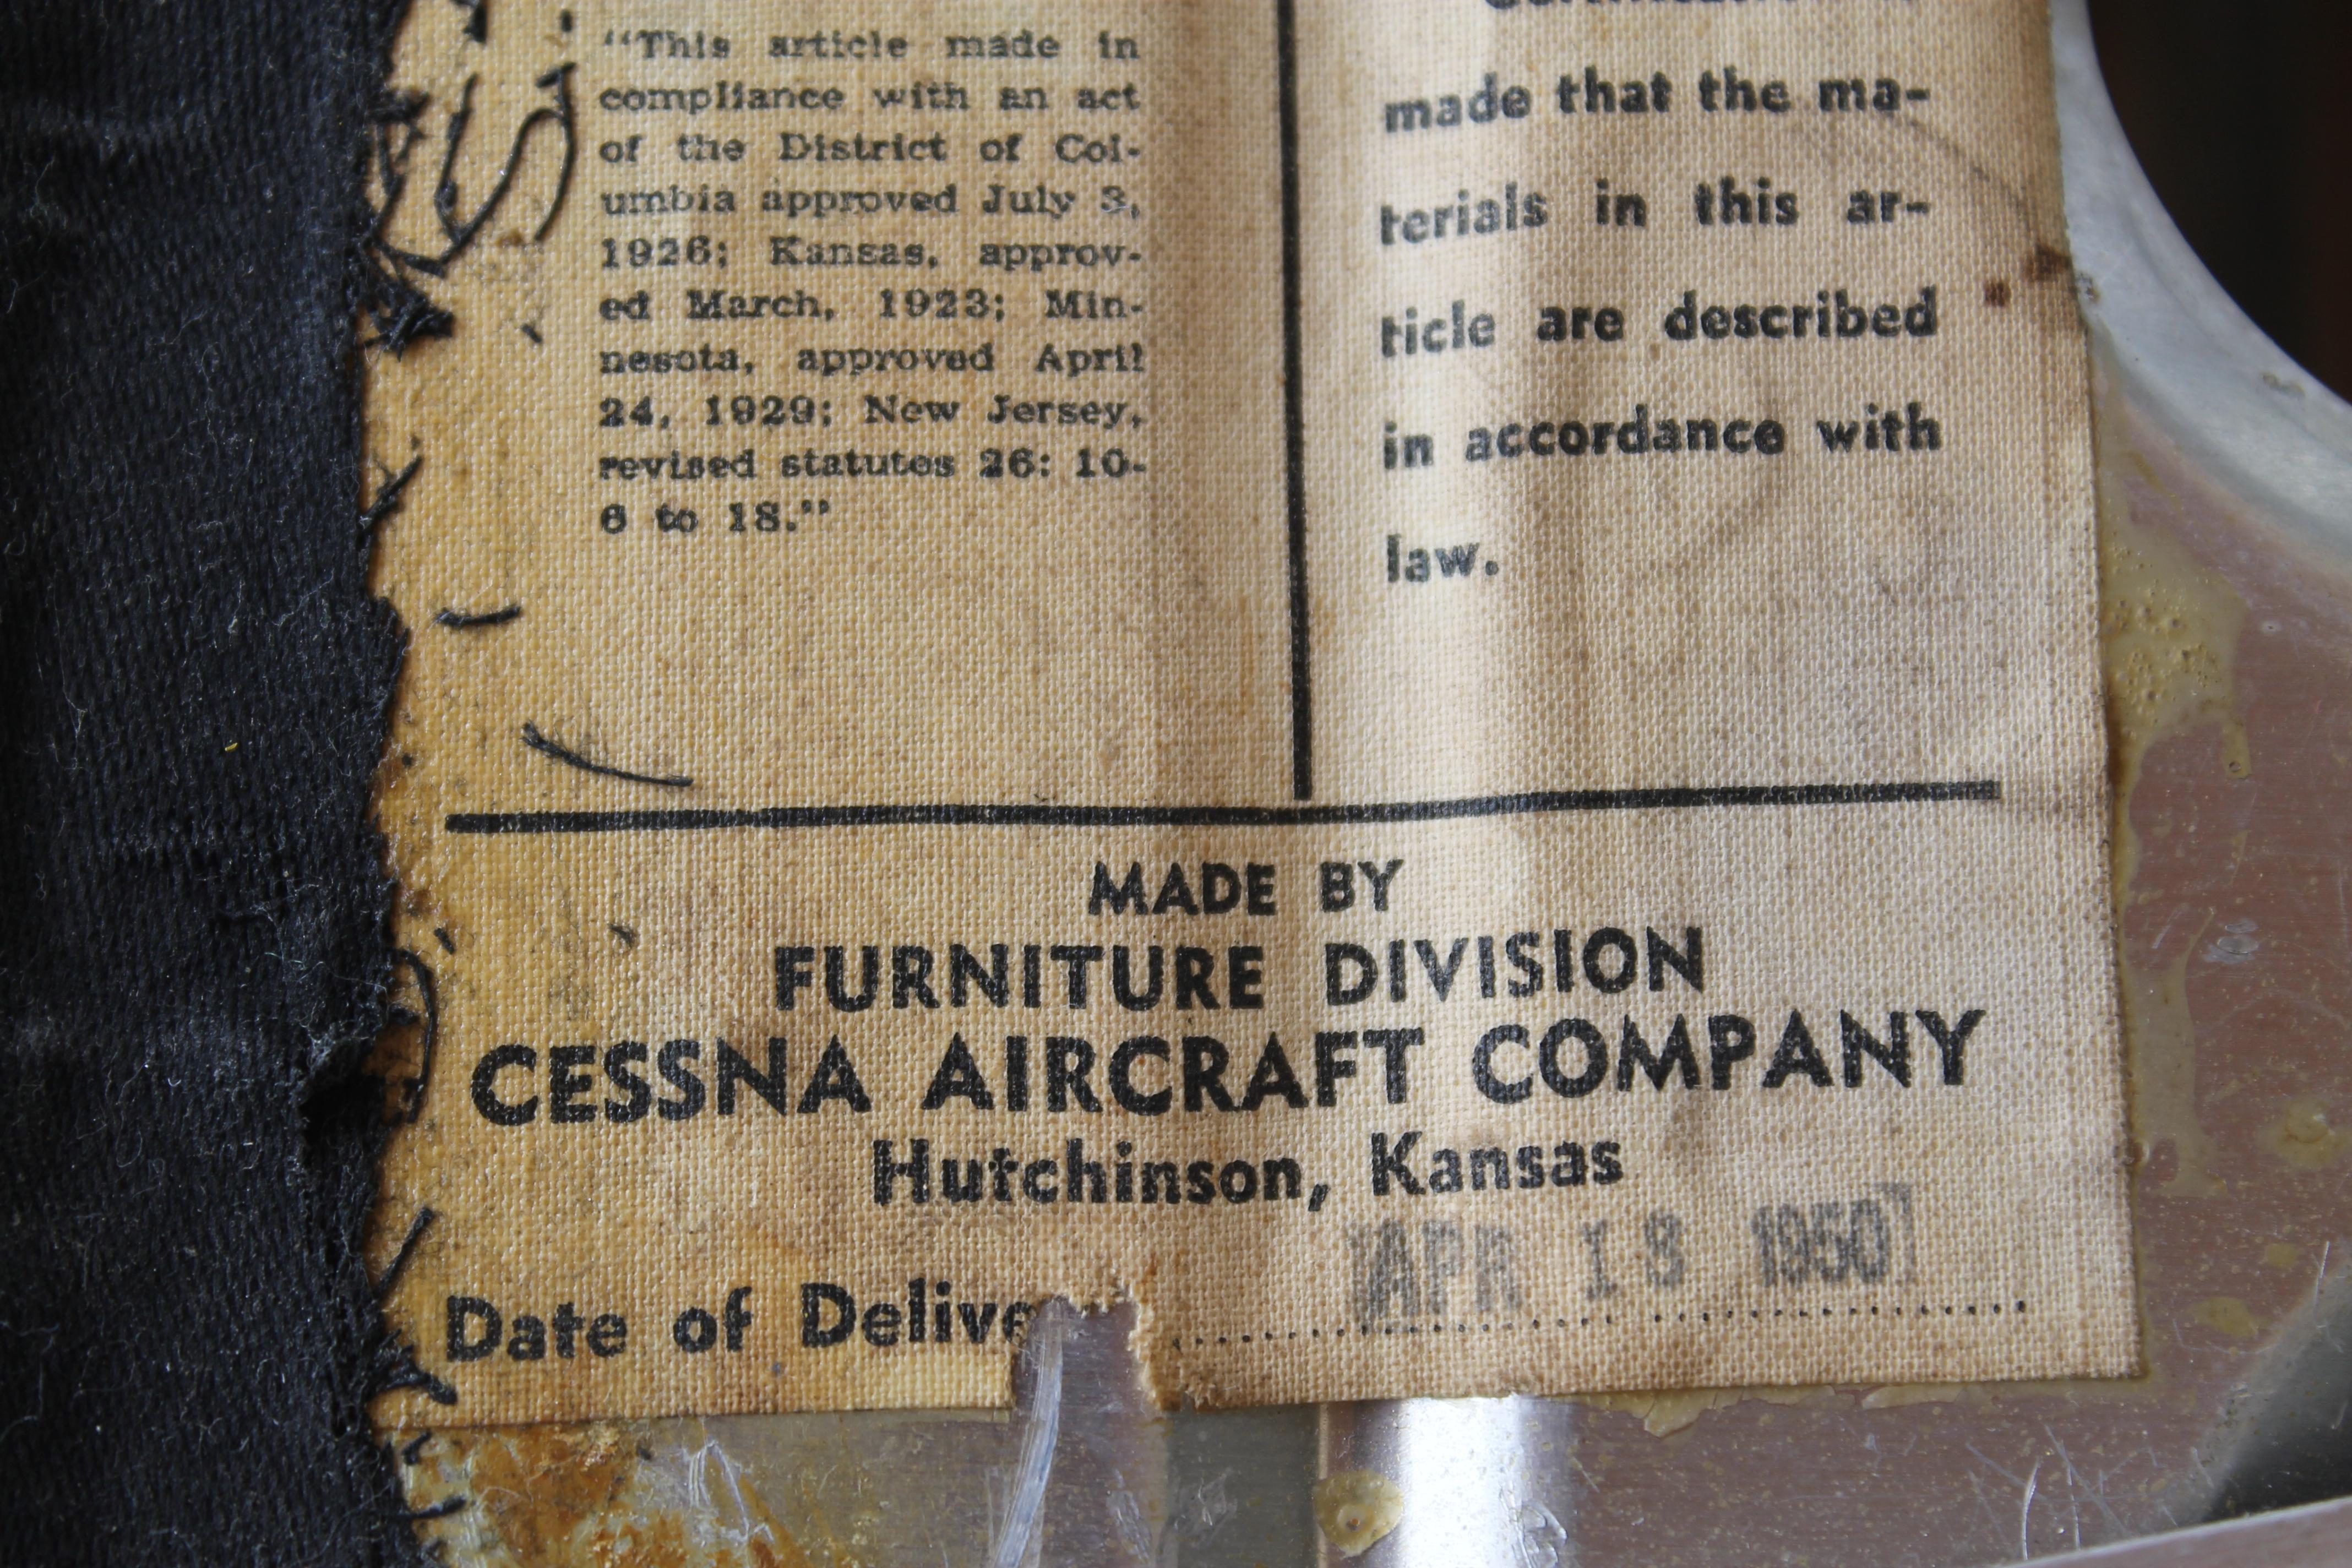 Six Aluminum Chairs by Cessna Aircraft Company, Hutchinson, Kansas 2